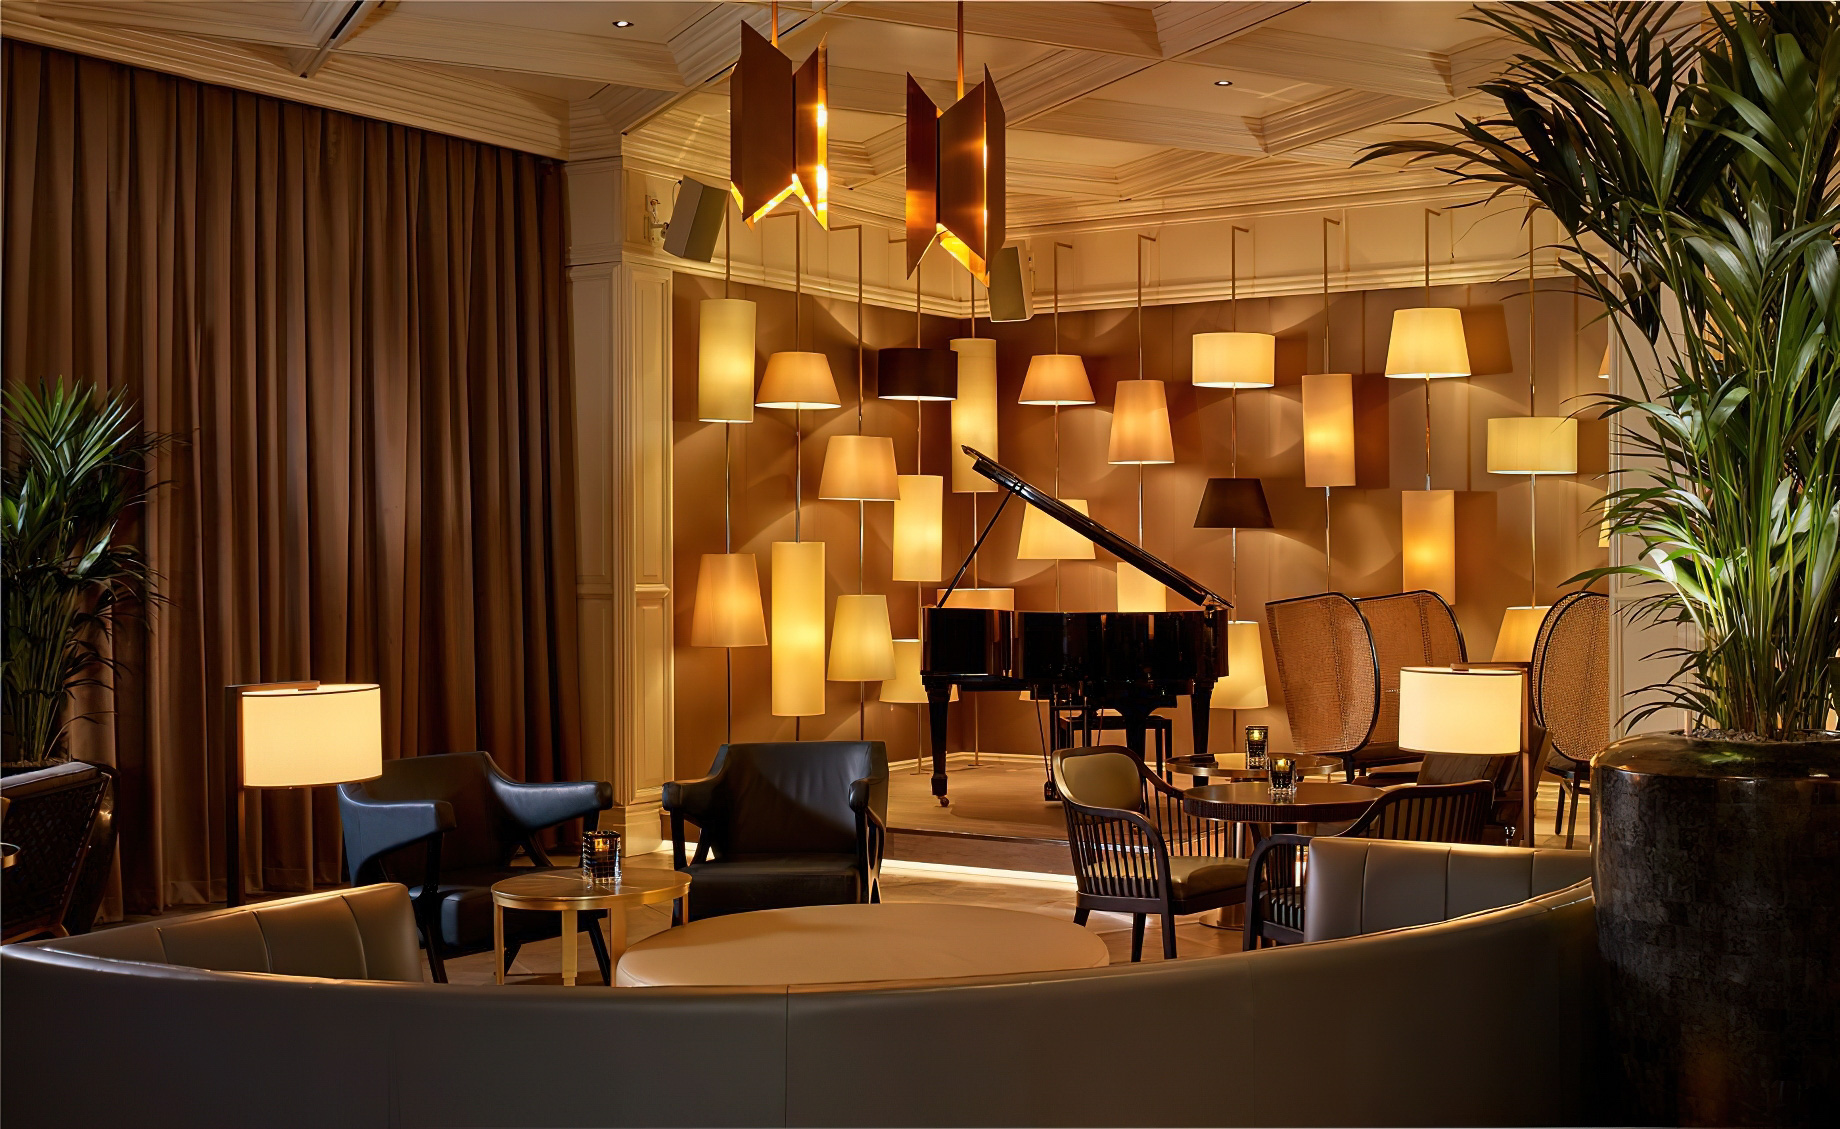 The Ritz-Carlton, Berlin Hotel – Berlin, Germany – The Curtain Club Decor